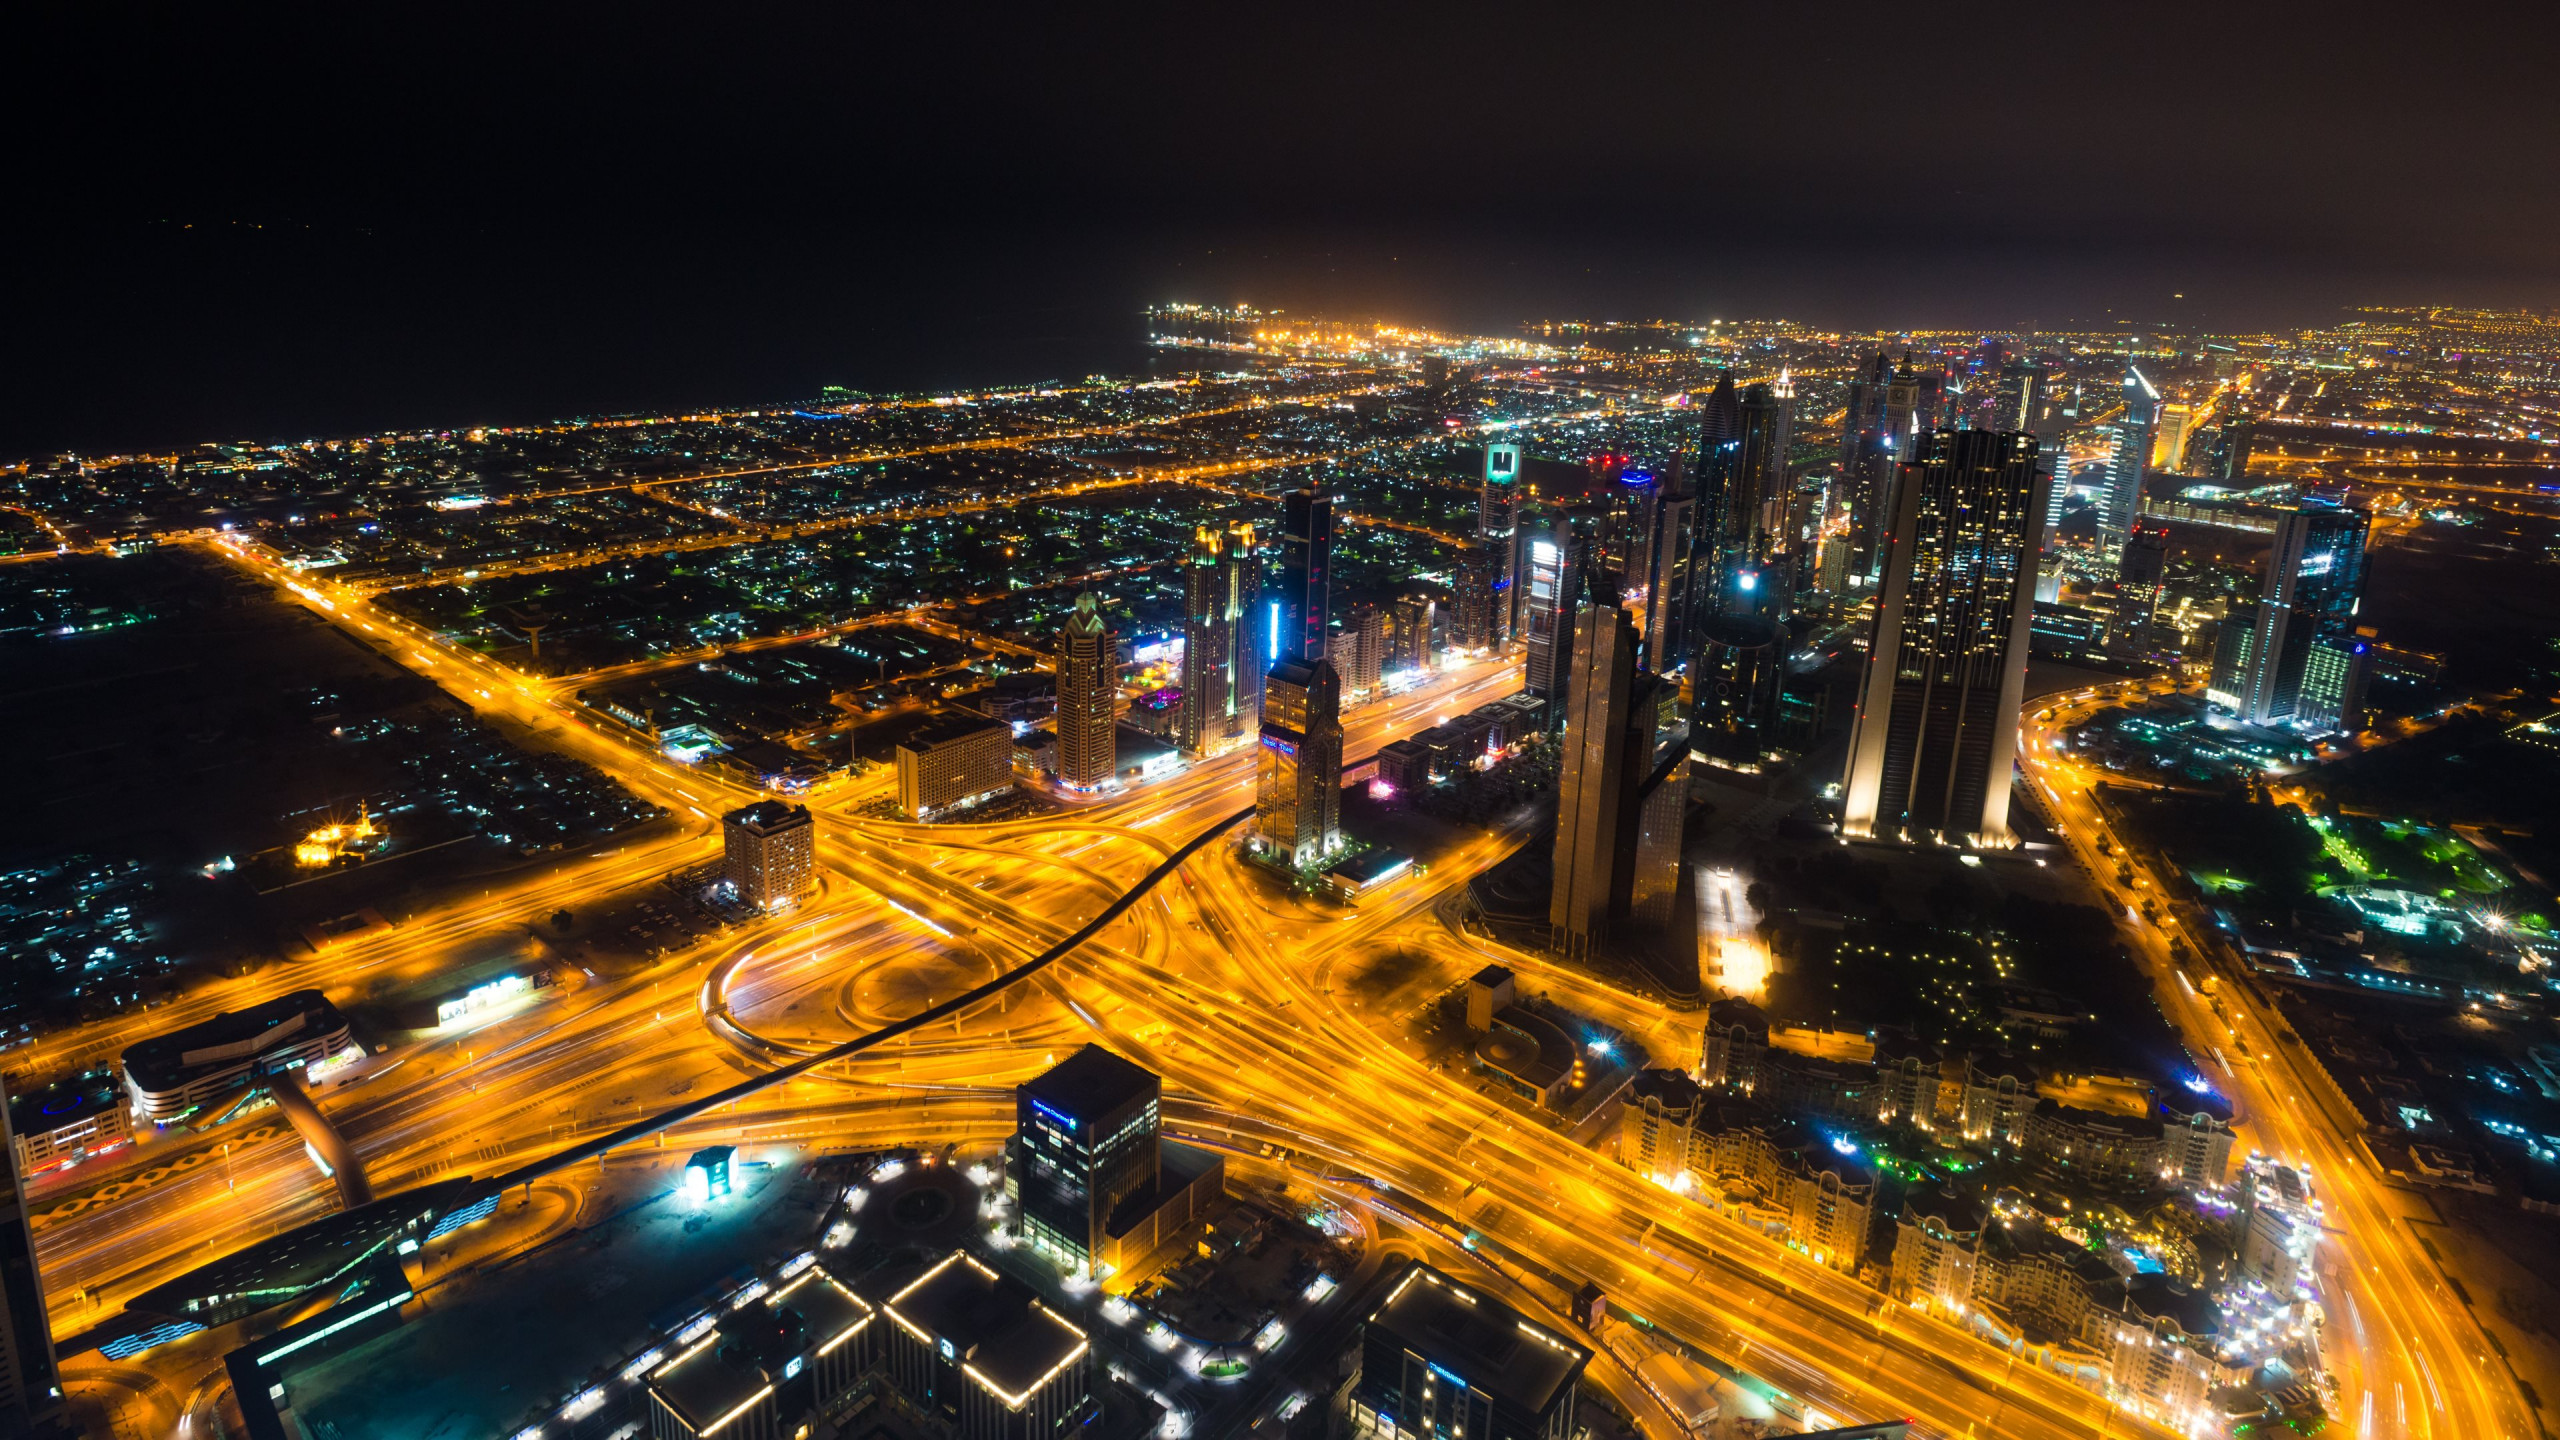 Download wallpaper: Dubai landscape by night 2560x1440